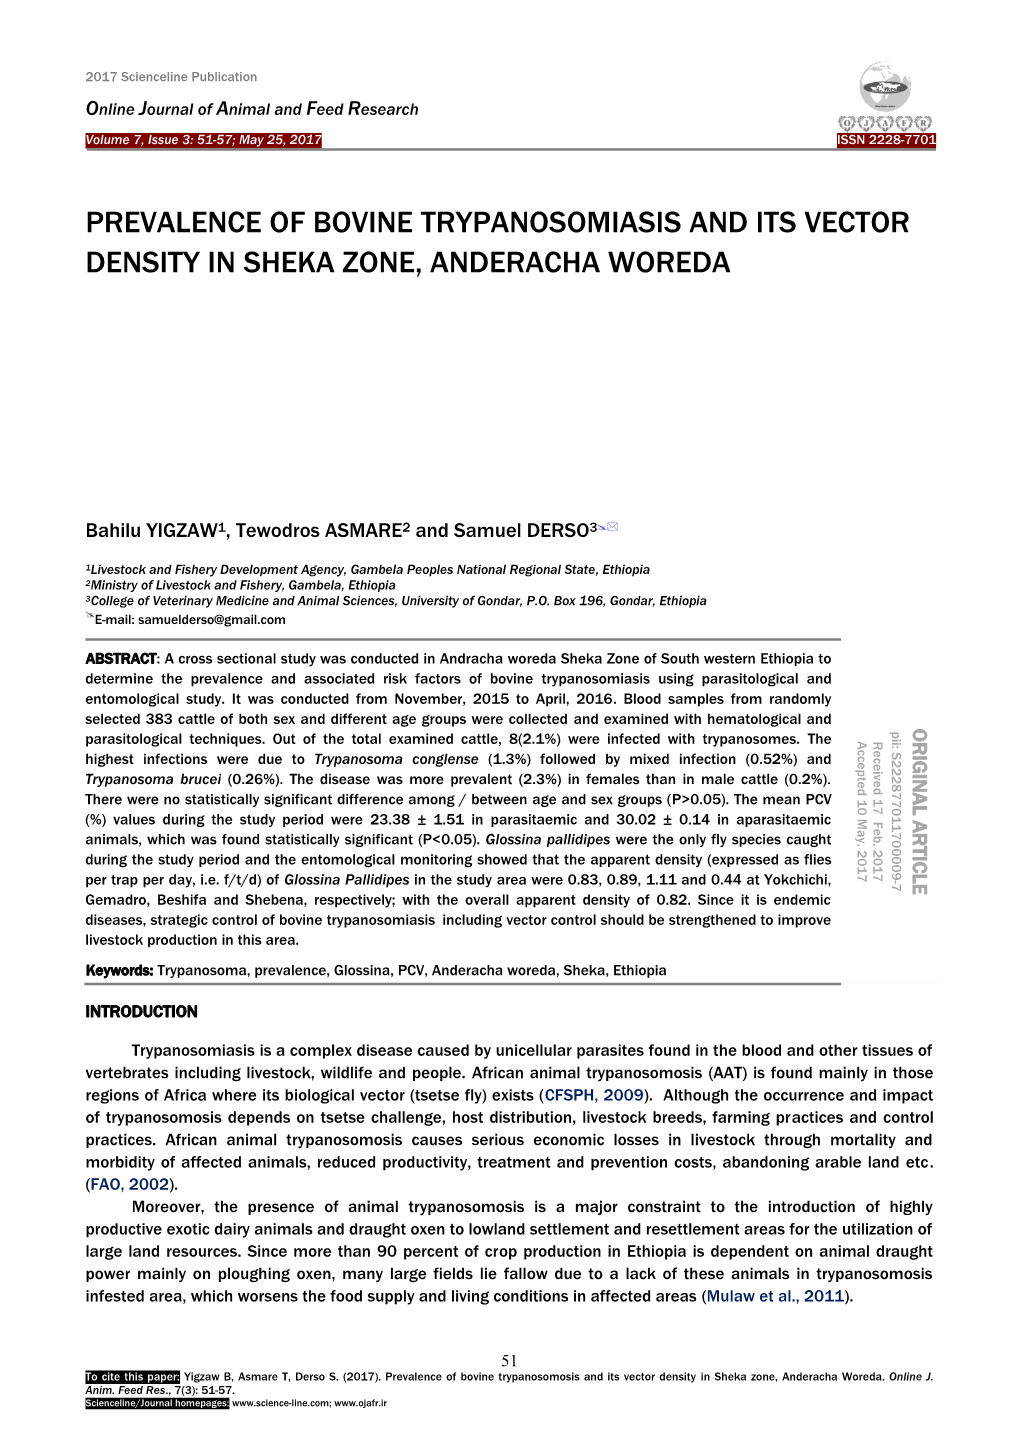 Prevalence of Bovine Trypanosomiasis and Its Vector Density in Sheka Zone, Anderacha Woreda